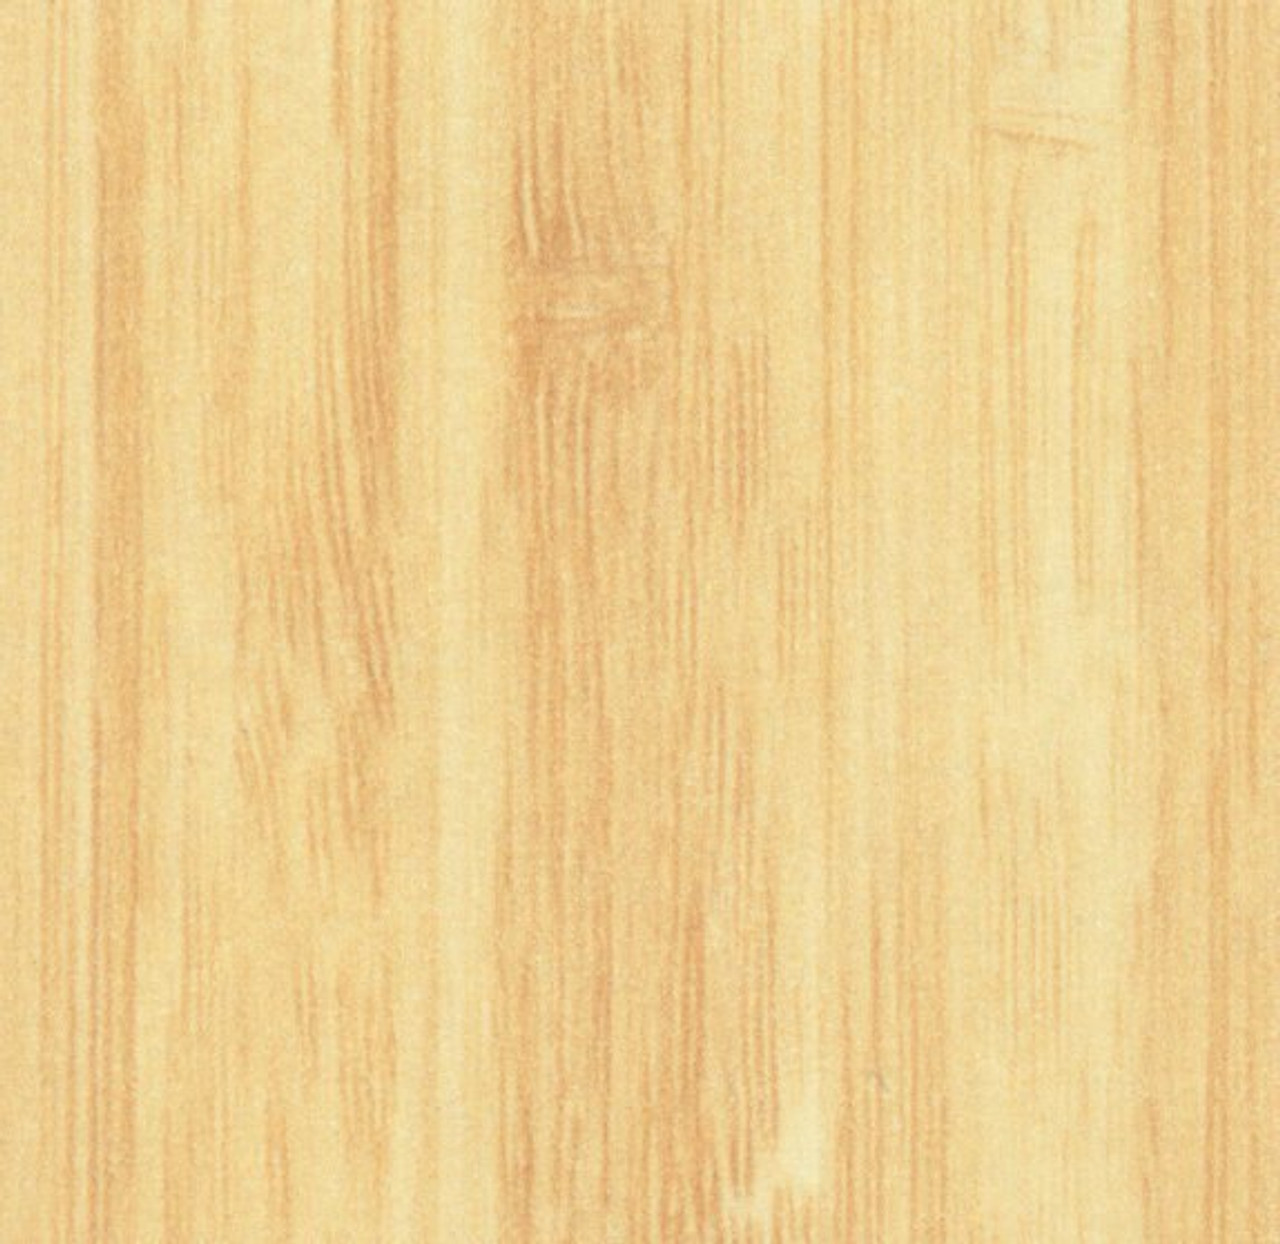 Beige Brown Oak Fake Wood Print Texture - High Resolution Stock